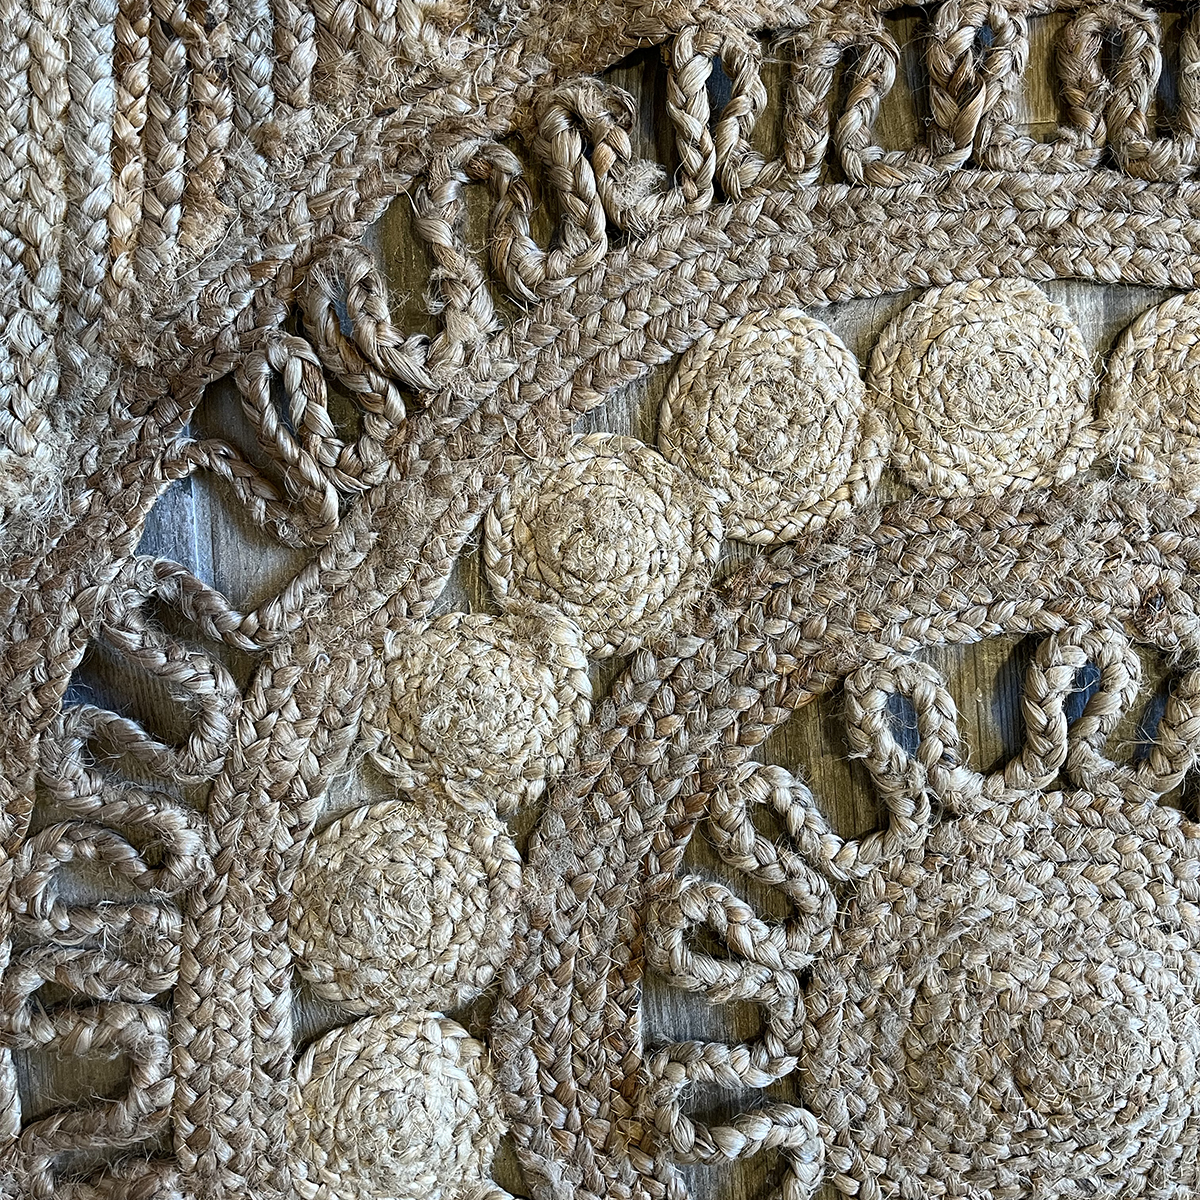 Rectangular woven jute Carpet - 100 x 150 cm